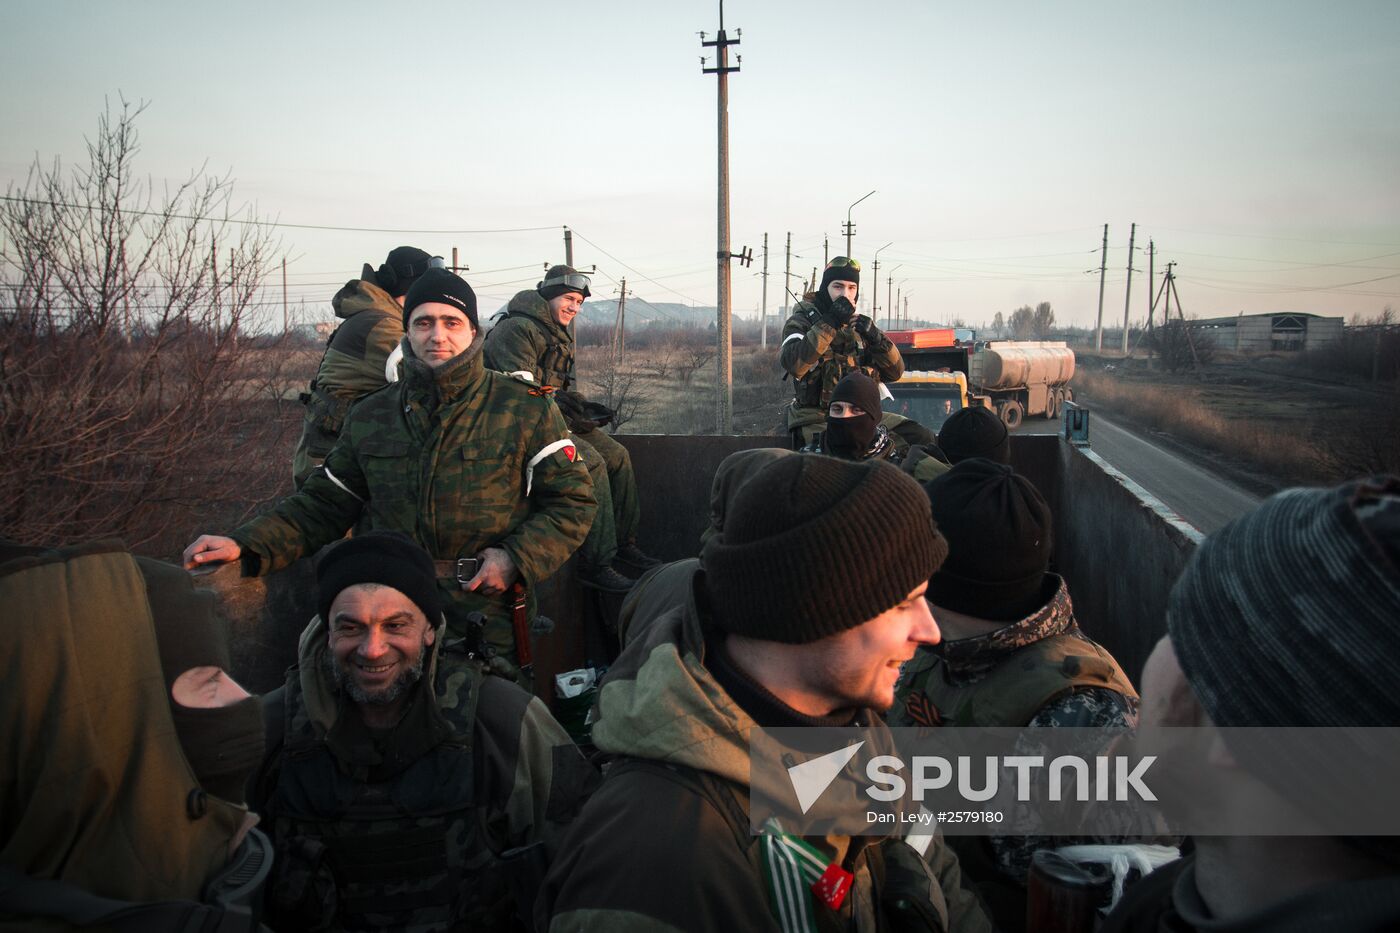 DPR self-defense fighters in Donetsk region